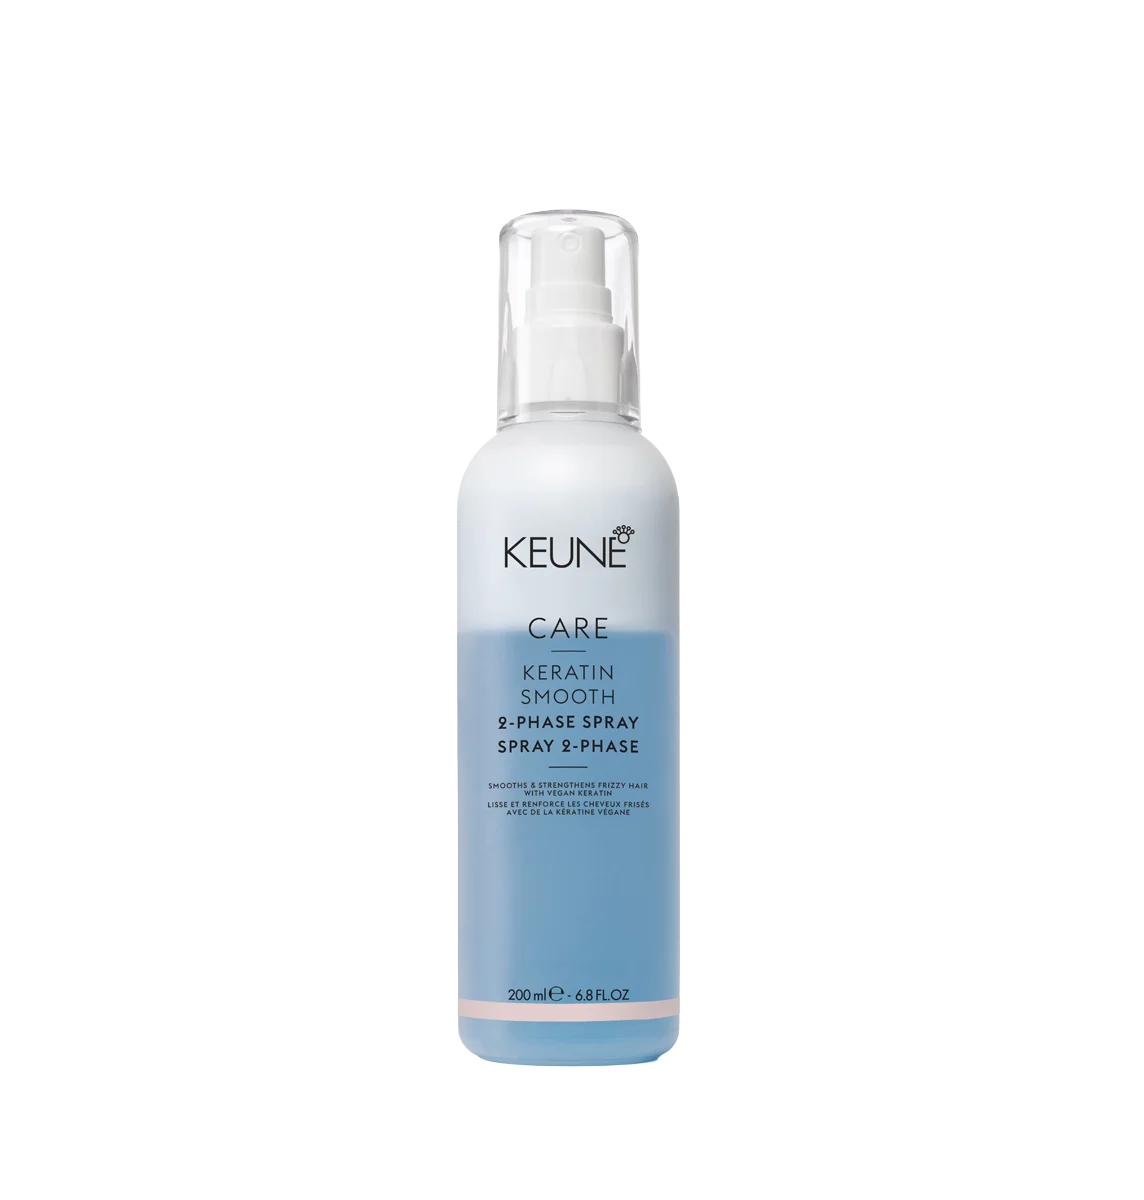 Image of spray bottle Keune Care Keratin Smooth 2-Phase Spray